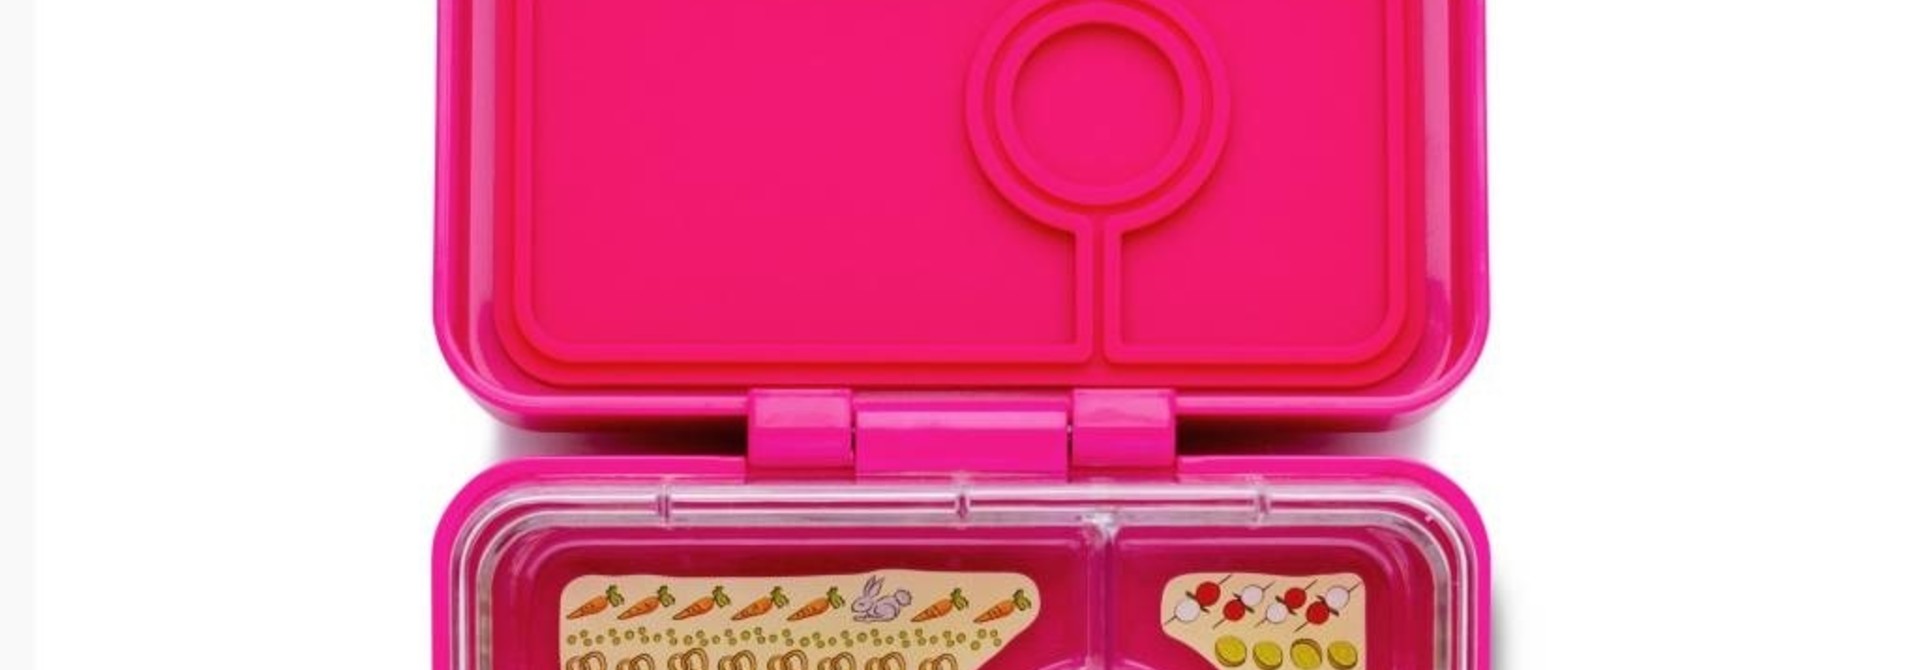 Yumbox MiniSnack - lekvrije Bento box lunchbox - 3 vakken - Cherie roze / Kittycat tray